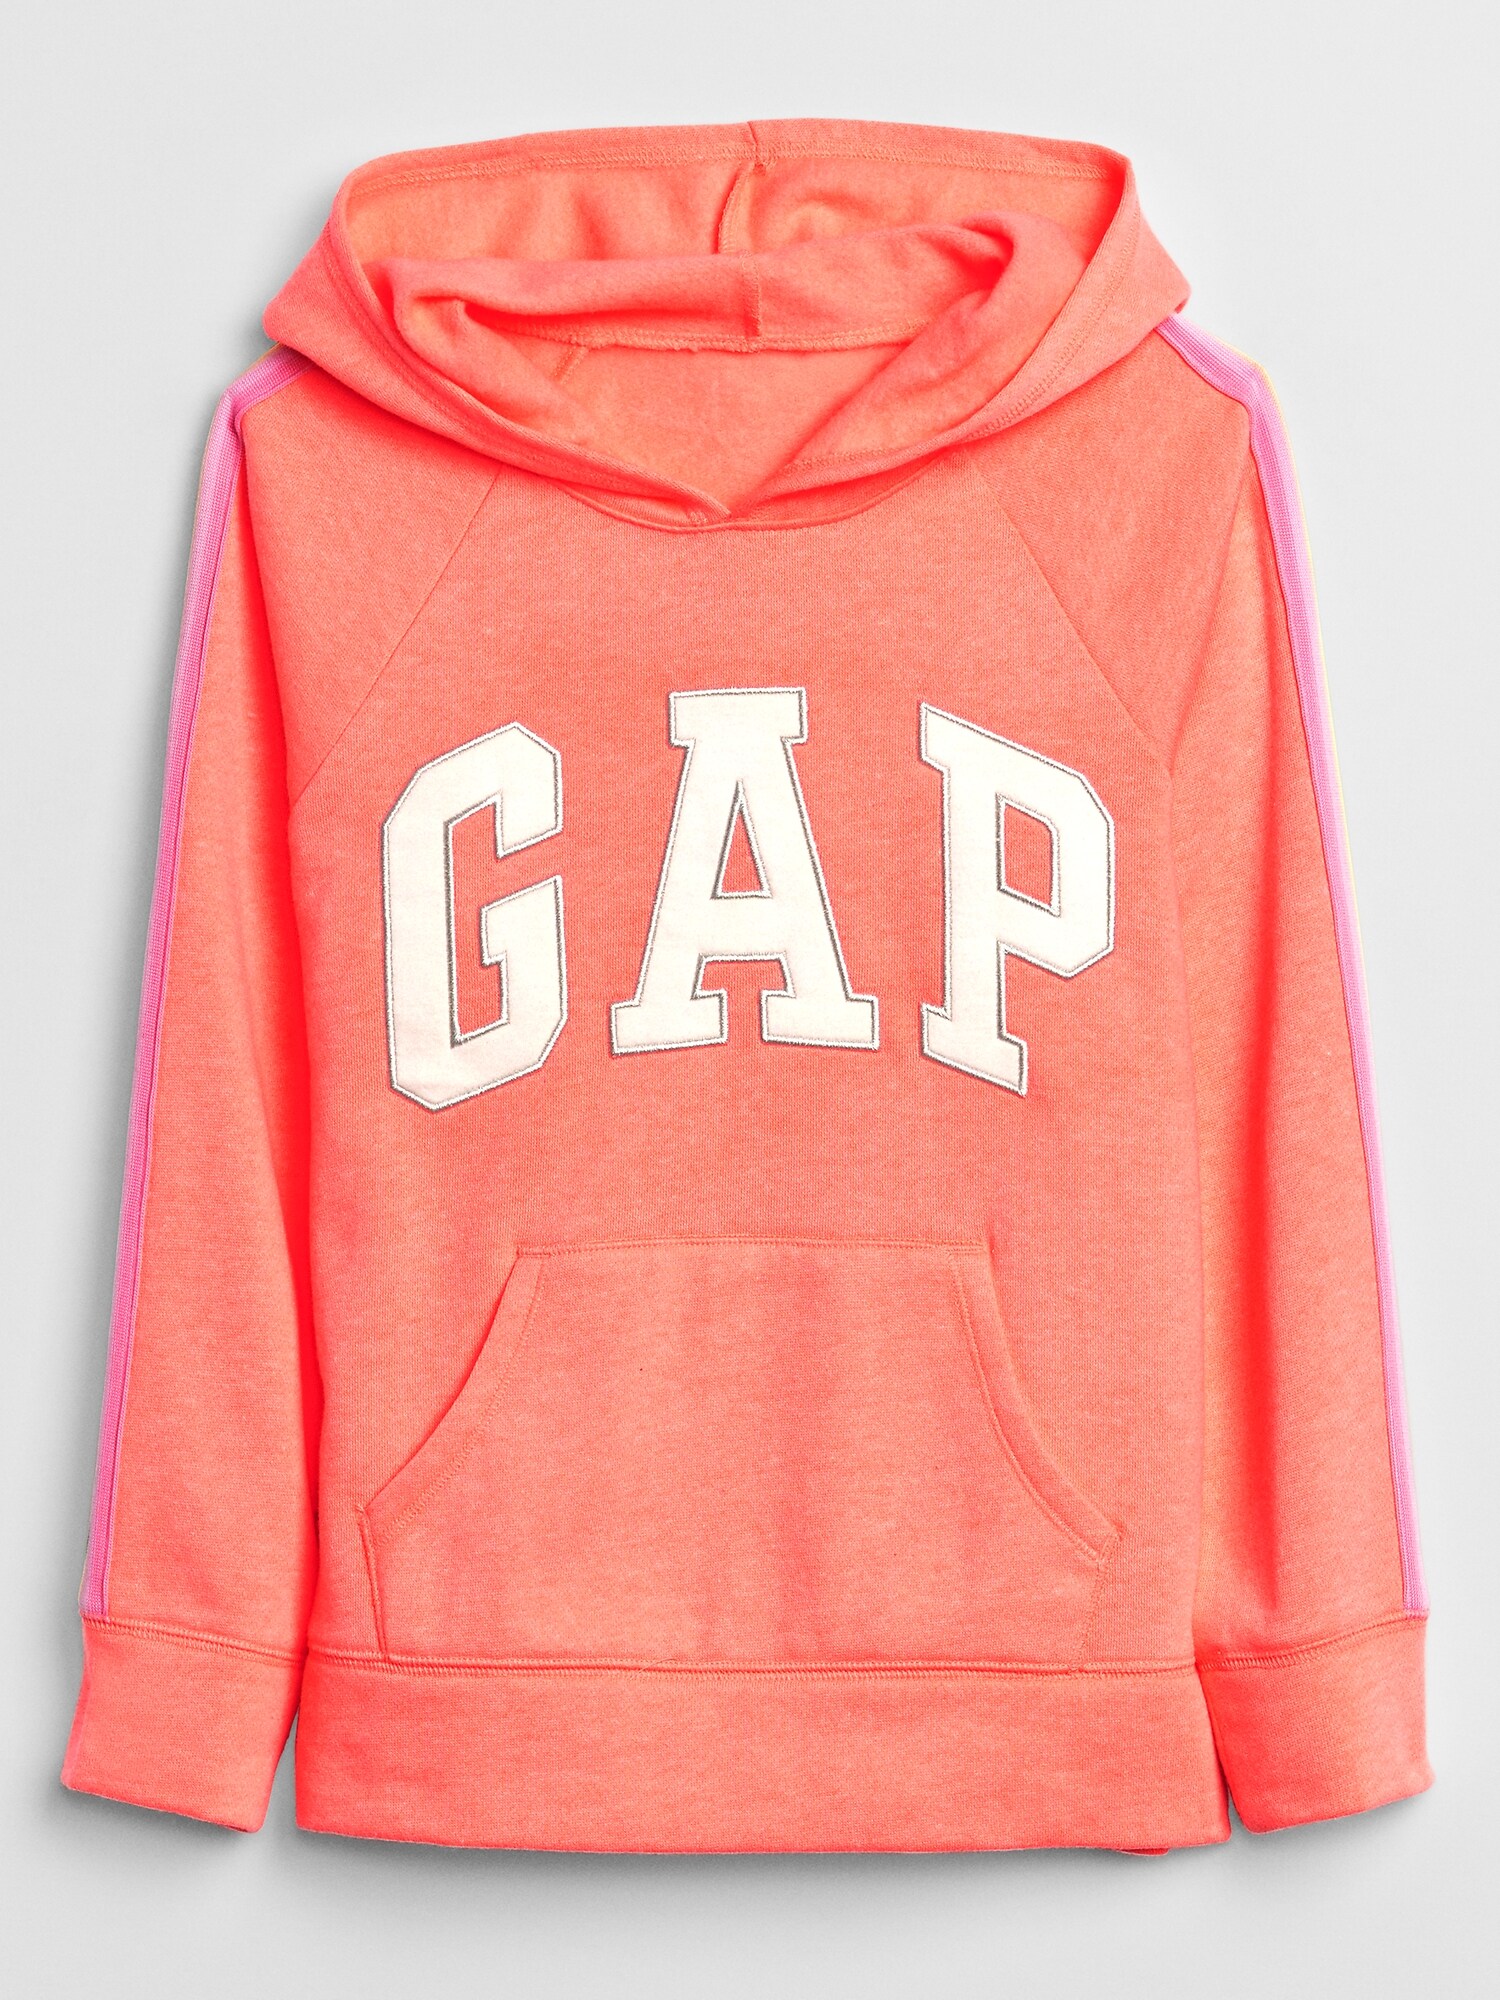 gap sweatshirts for kids